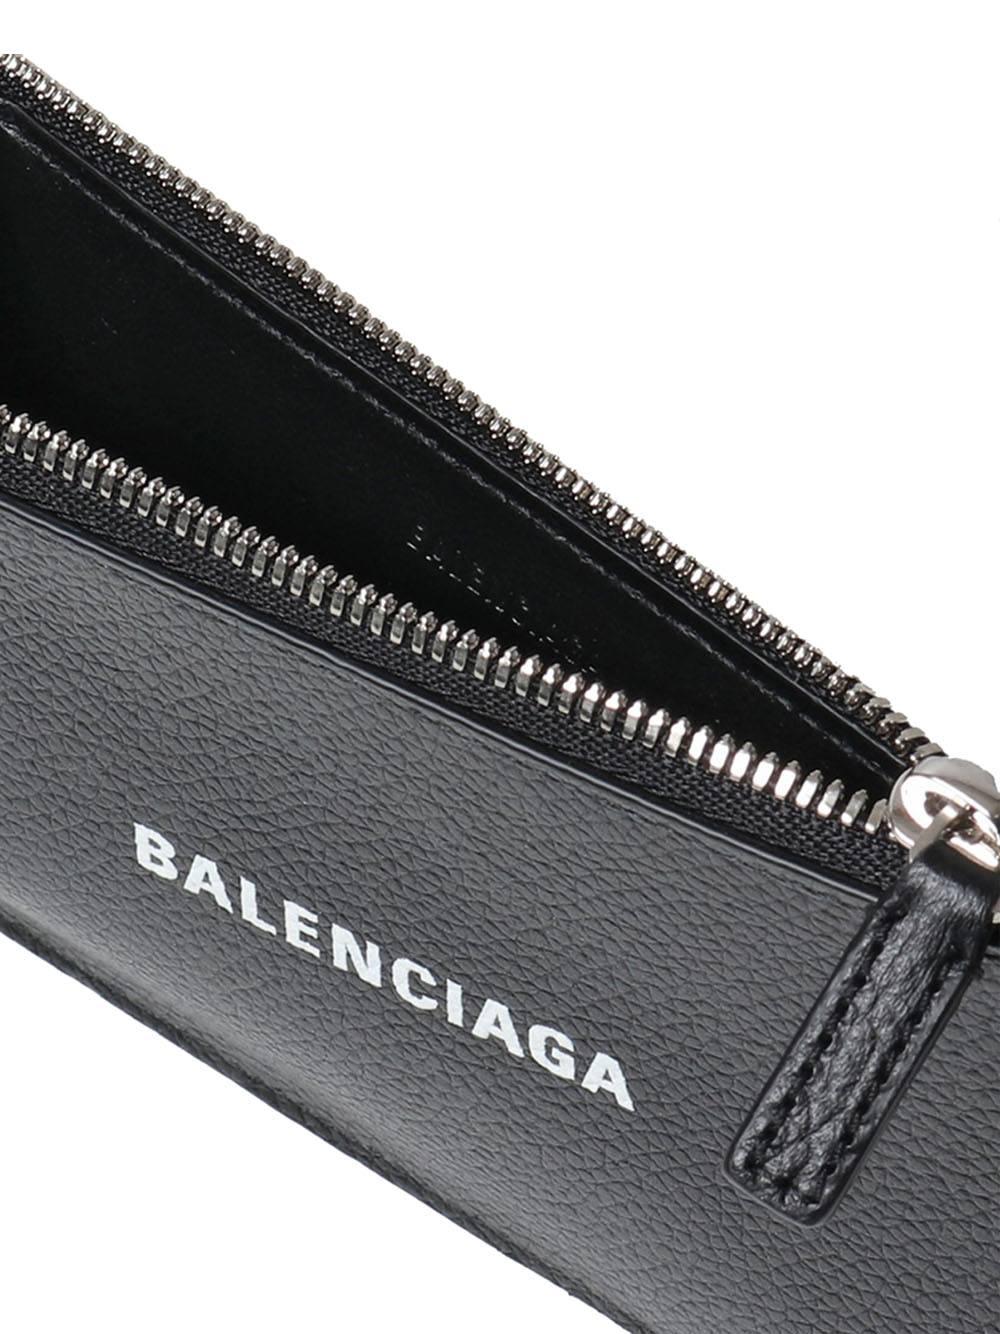 Balenciaga Logo Zipped Cardholder Black for Men | Lyst